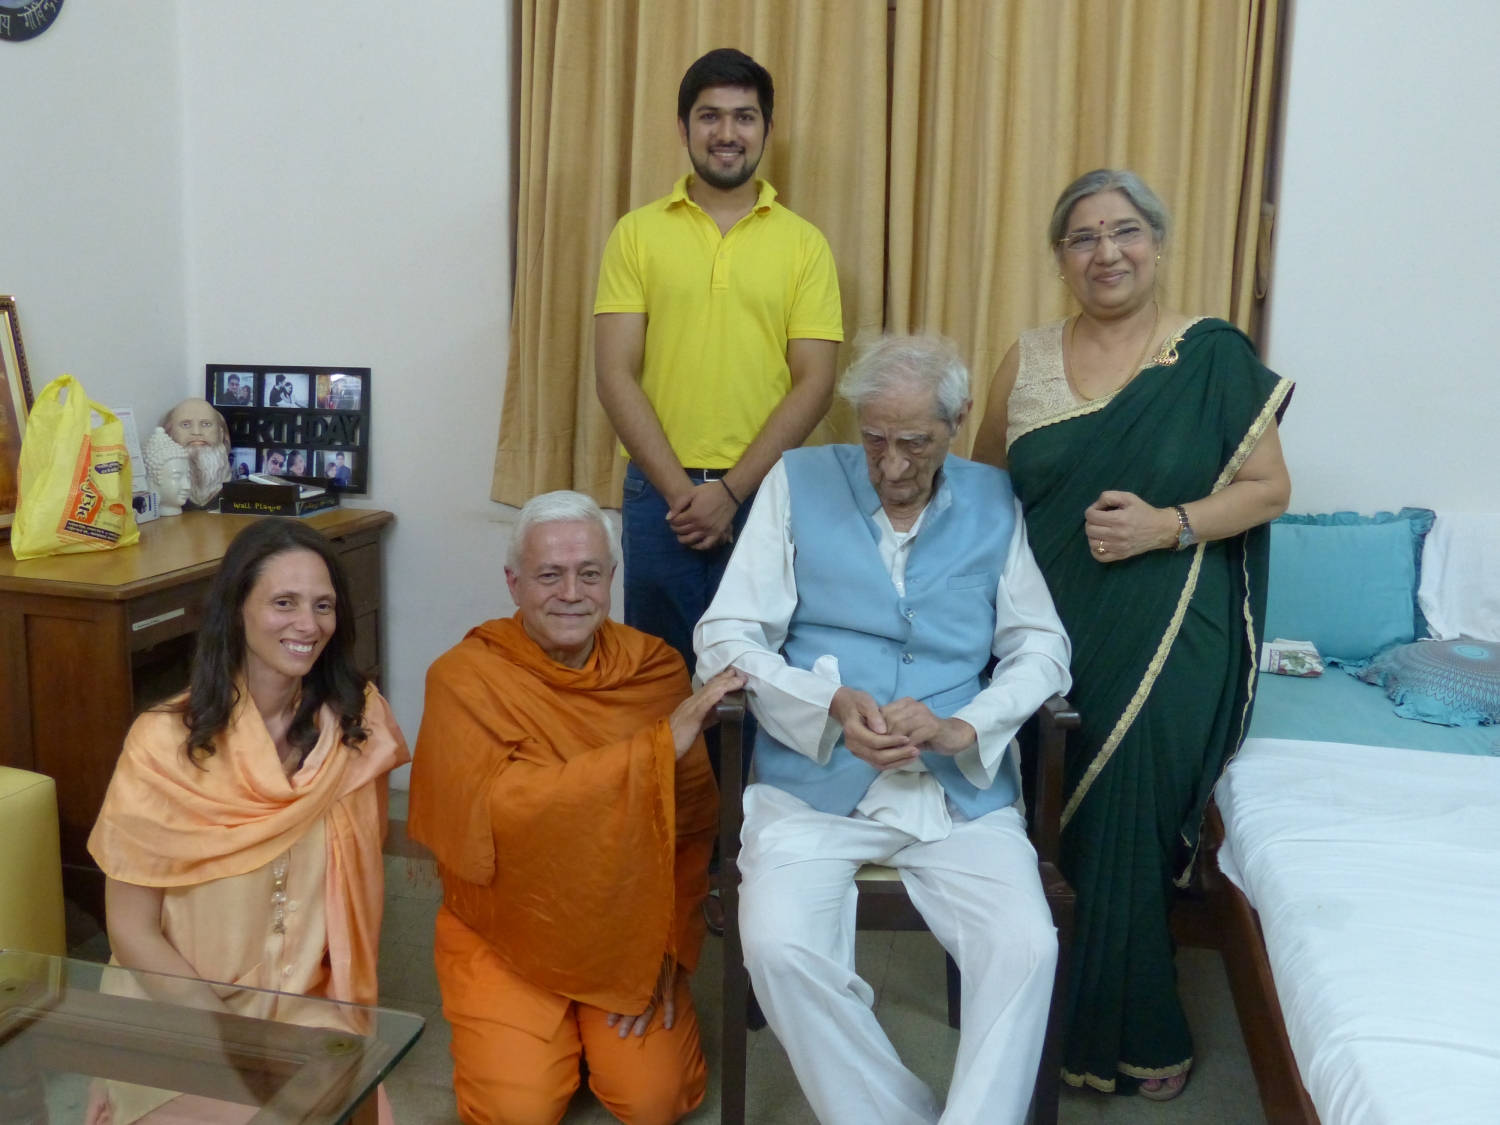 Meeting of H.H. Jagat Guru Amrta Sūryānanda Mahā Rāja with Dr. Jayadeva Yogendra - The Yoga Institute of Santa Cruz, Mumbai, India - 2016, January